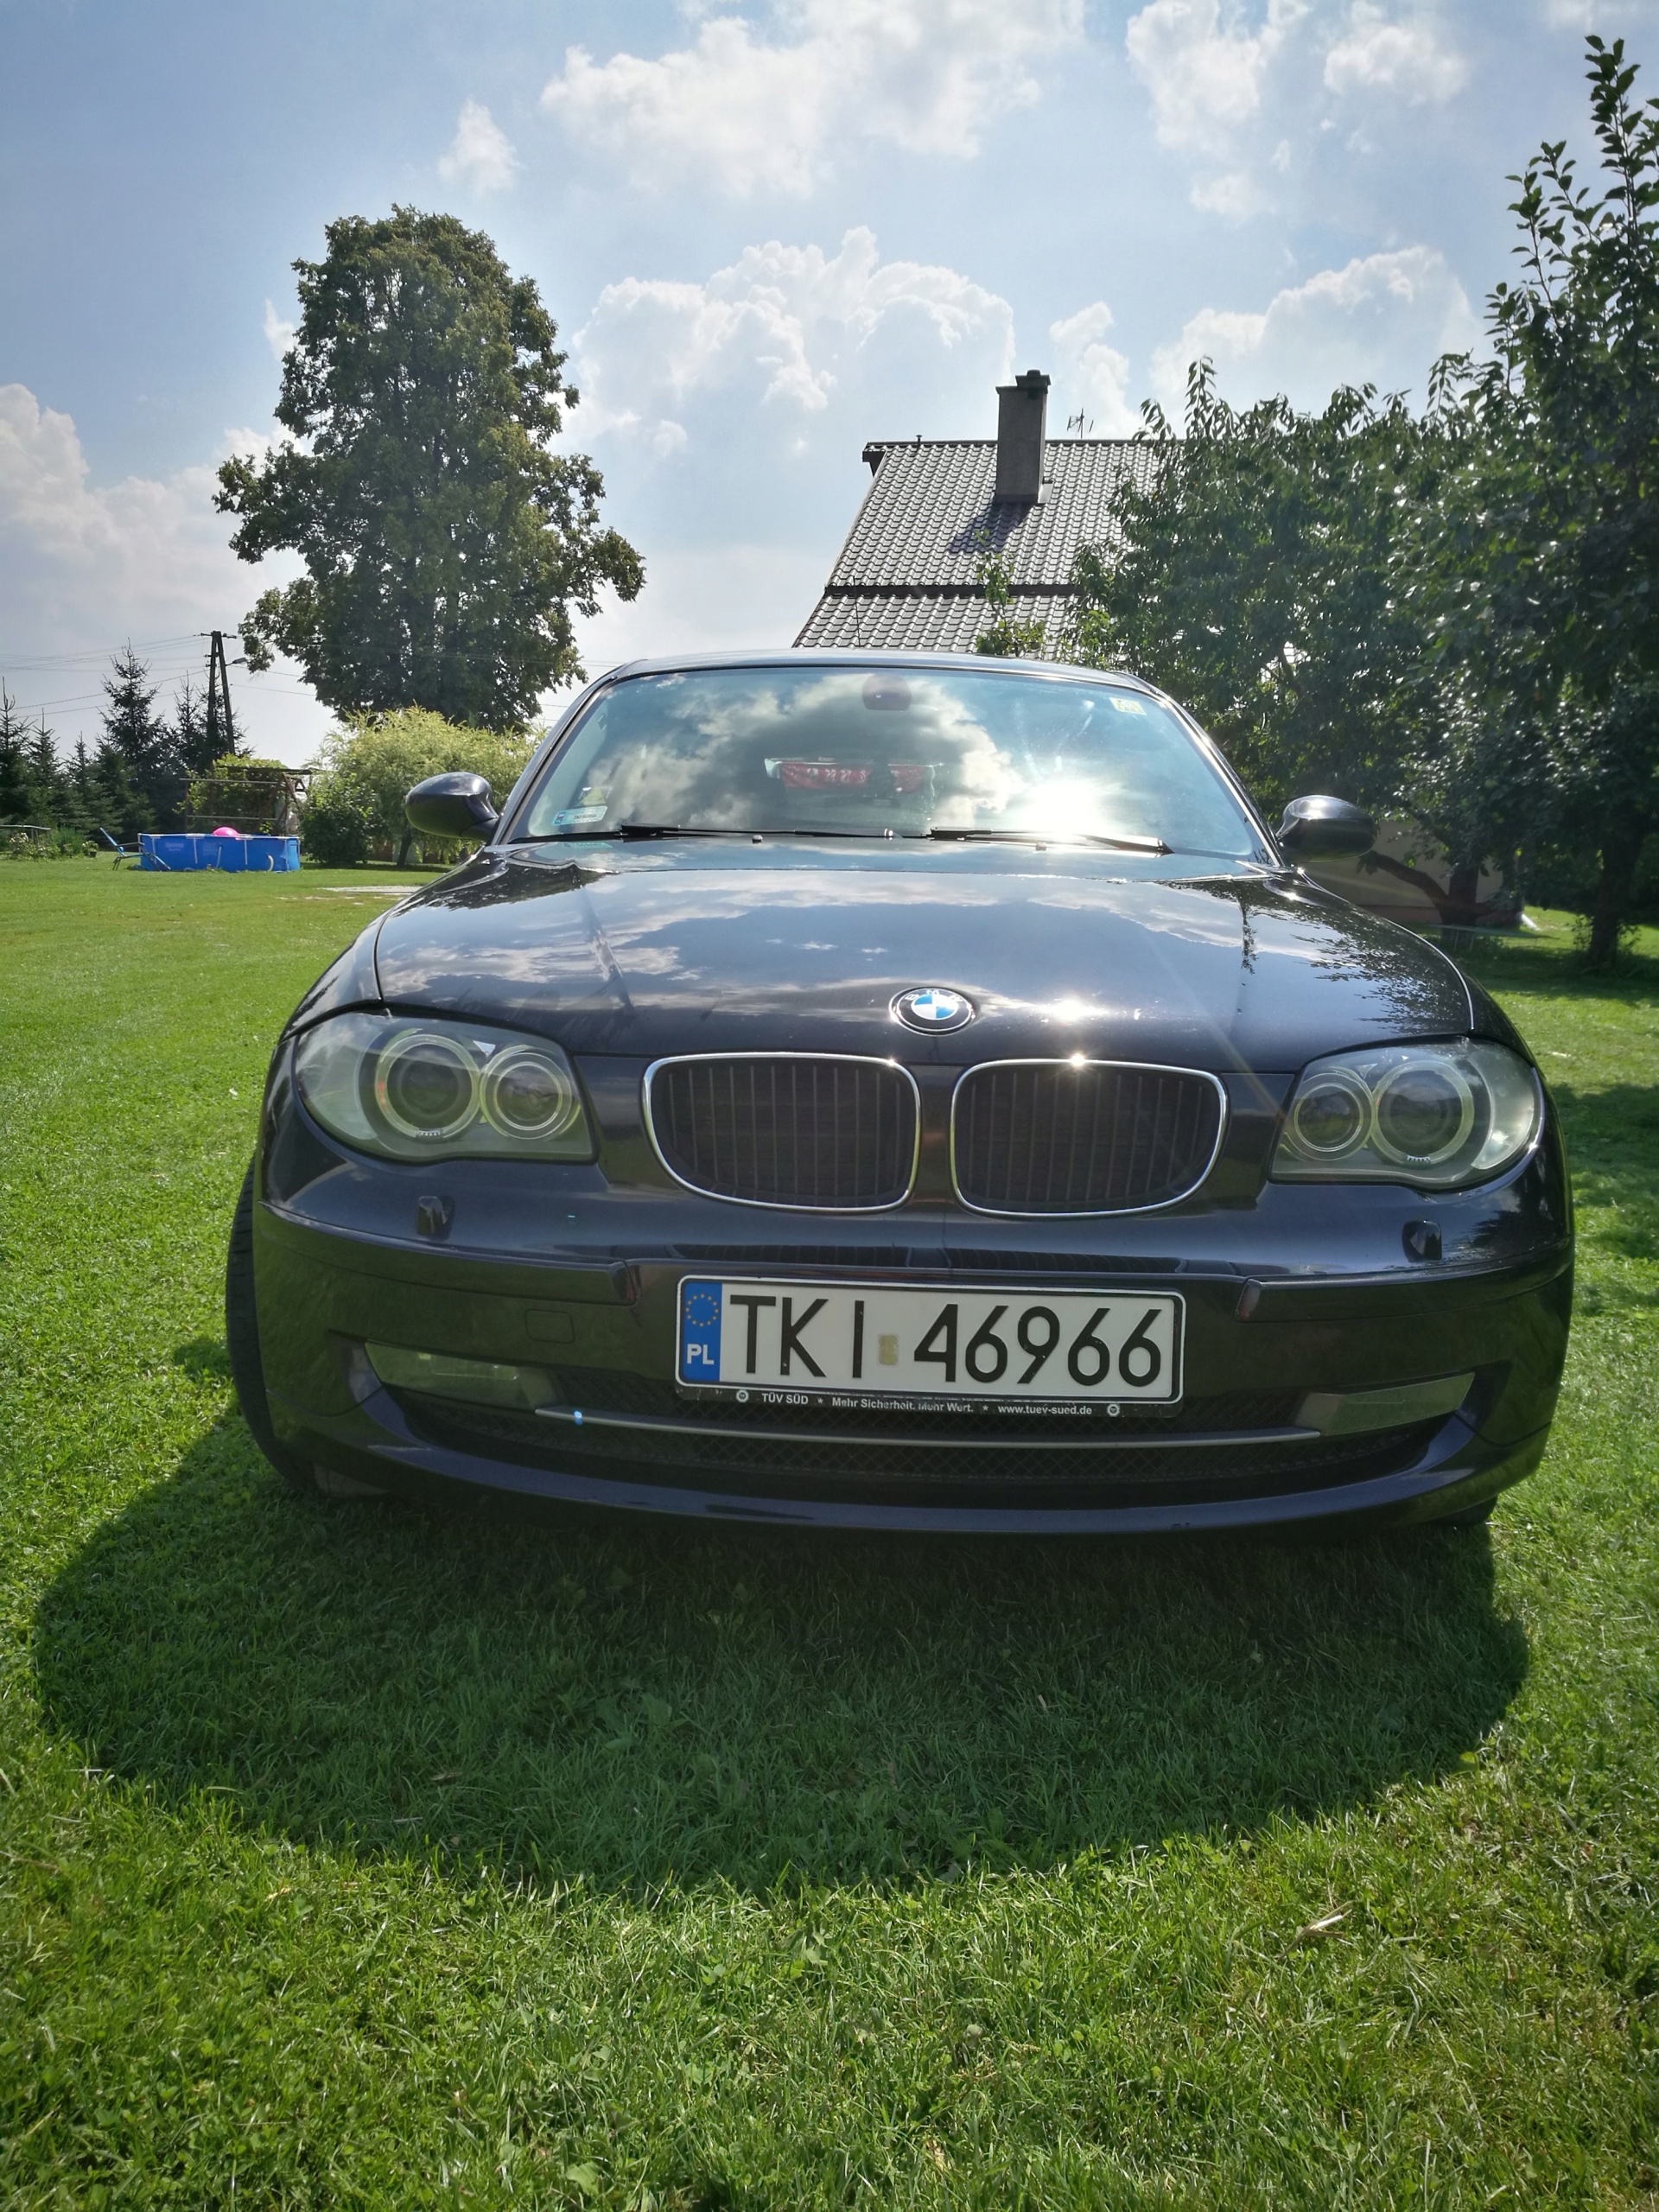 BMW E87 118d Lift 18" BIAŁA PIĘKNA - 7330016220 - oficjalne archiwum  Allegro